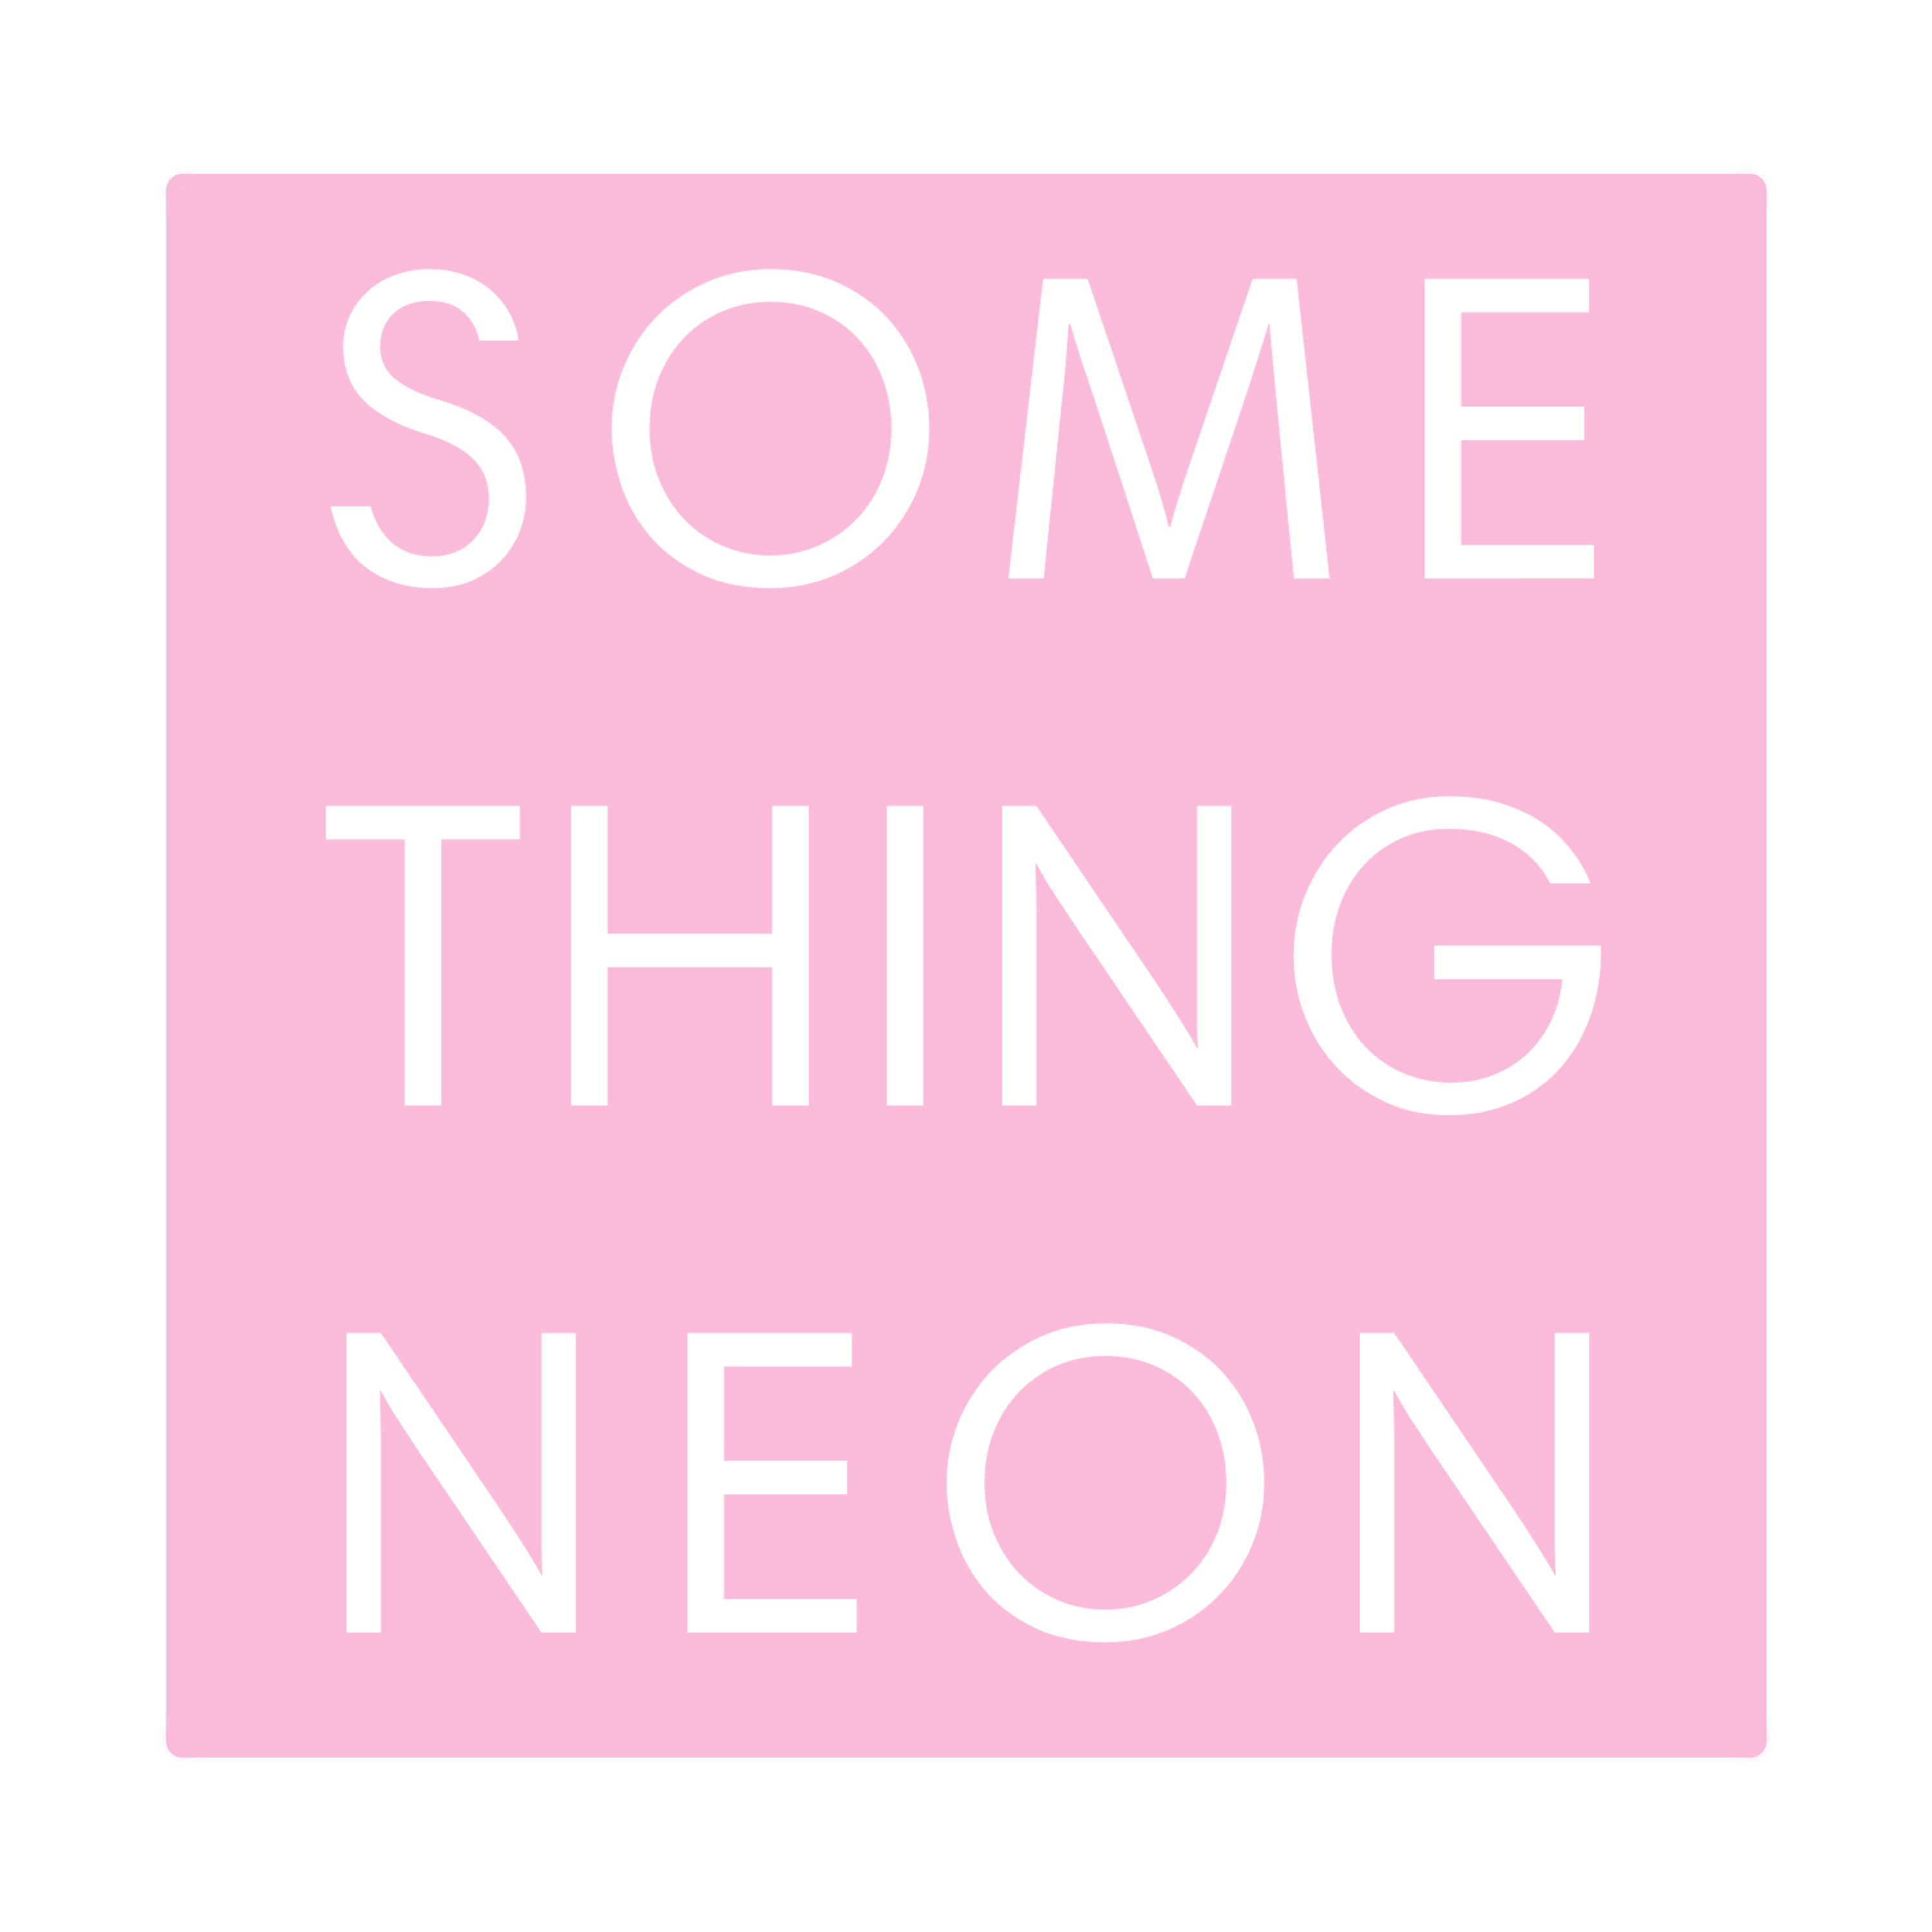 Something Neon